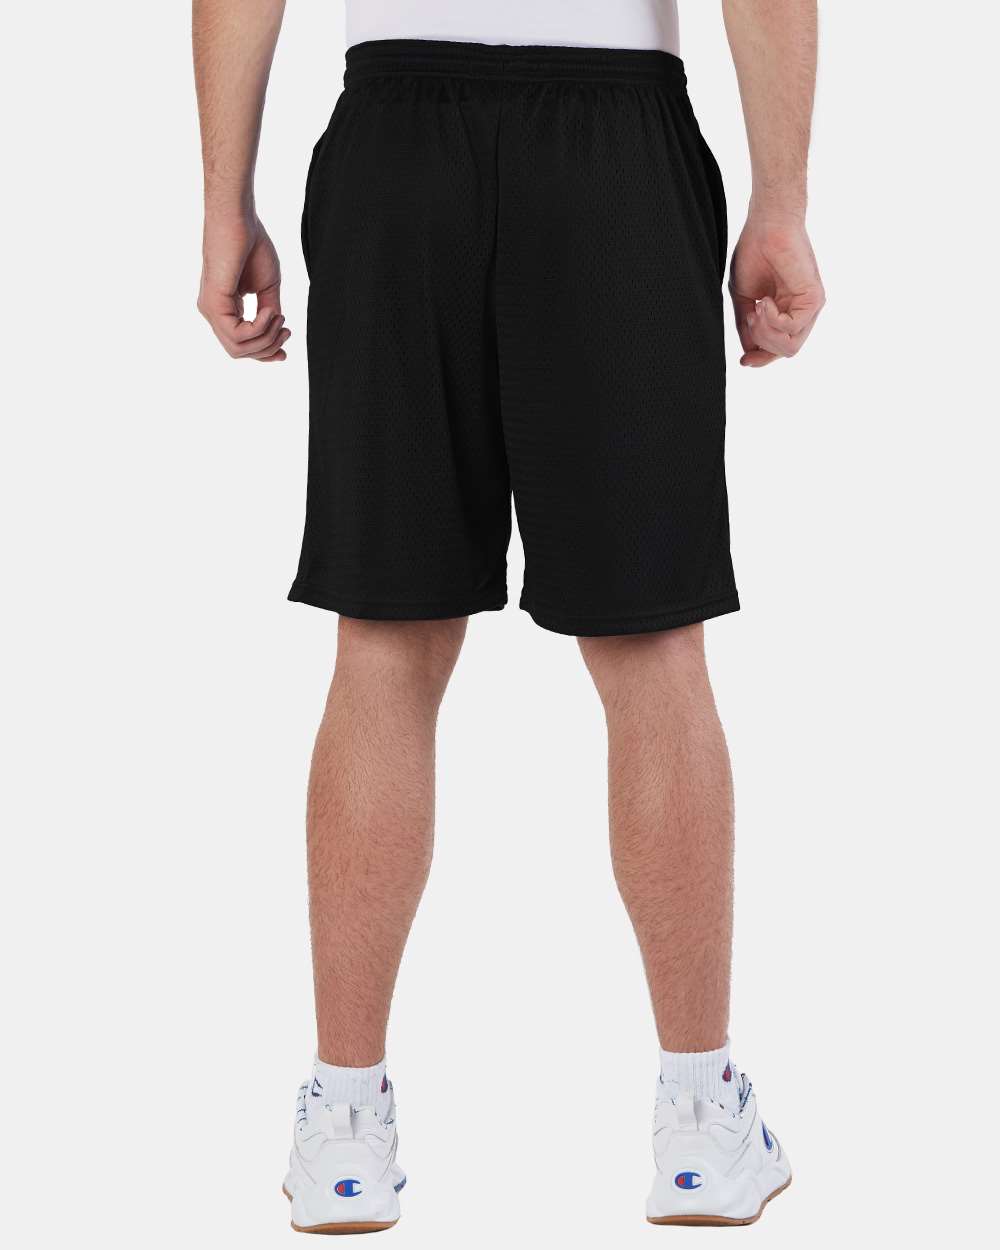 S162 - Champion Long Mesh Men's Shorts with Pockets